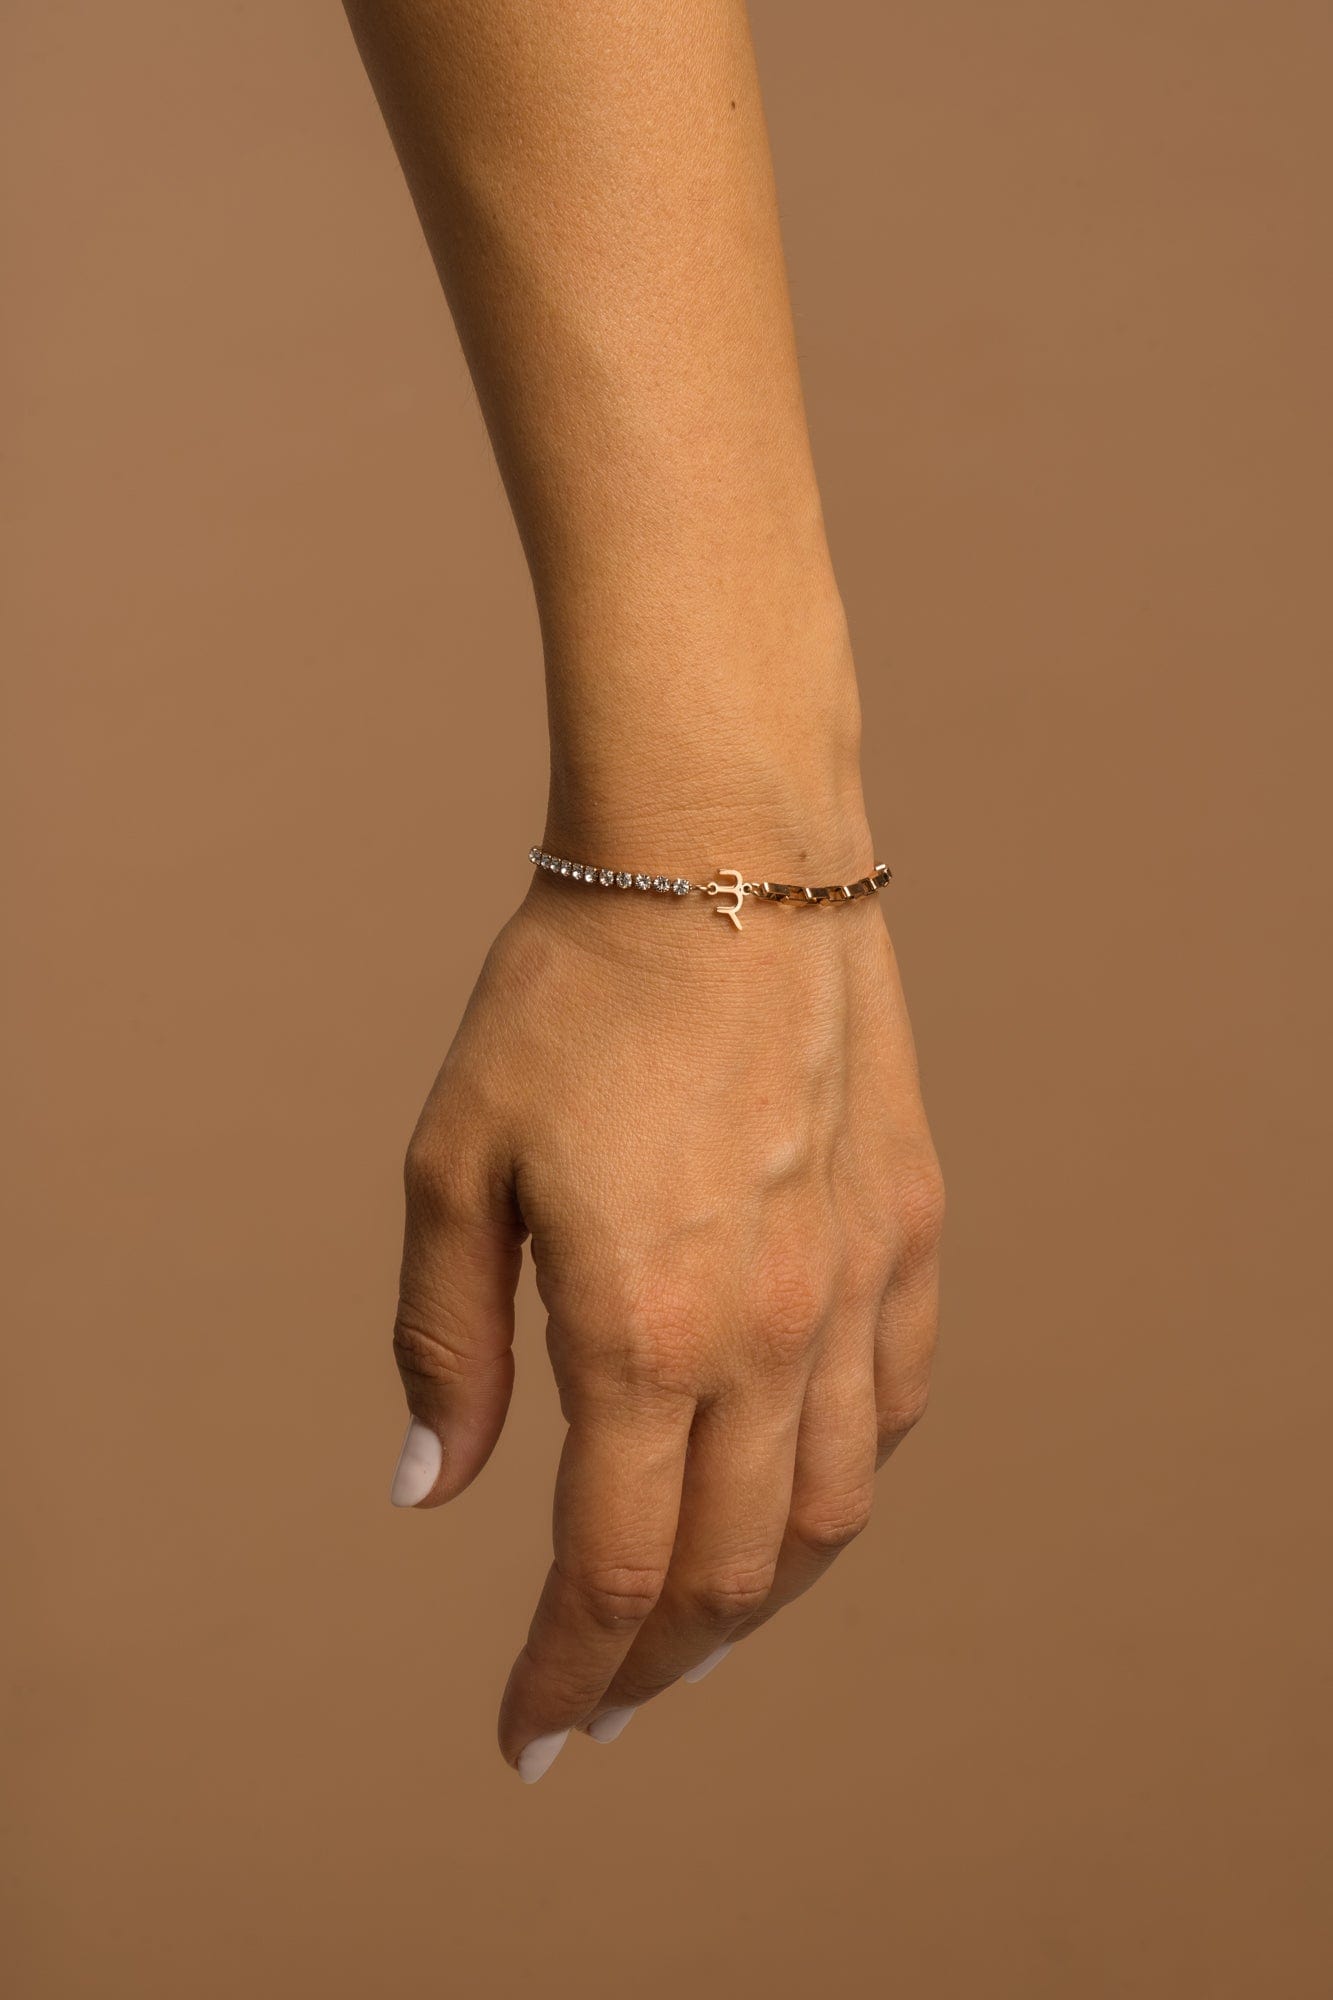 bianco rosso Bracelet FREE GIFT - BR Tennis & Chain Bracelet cyprus greece jewelry gift free shipping europe worldwide